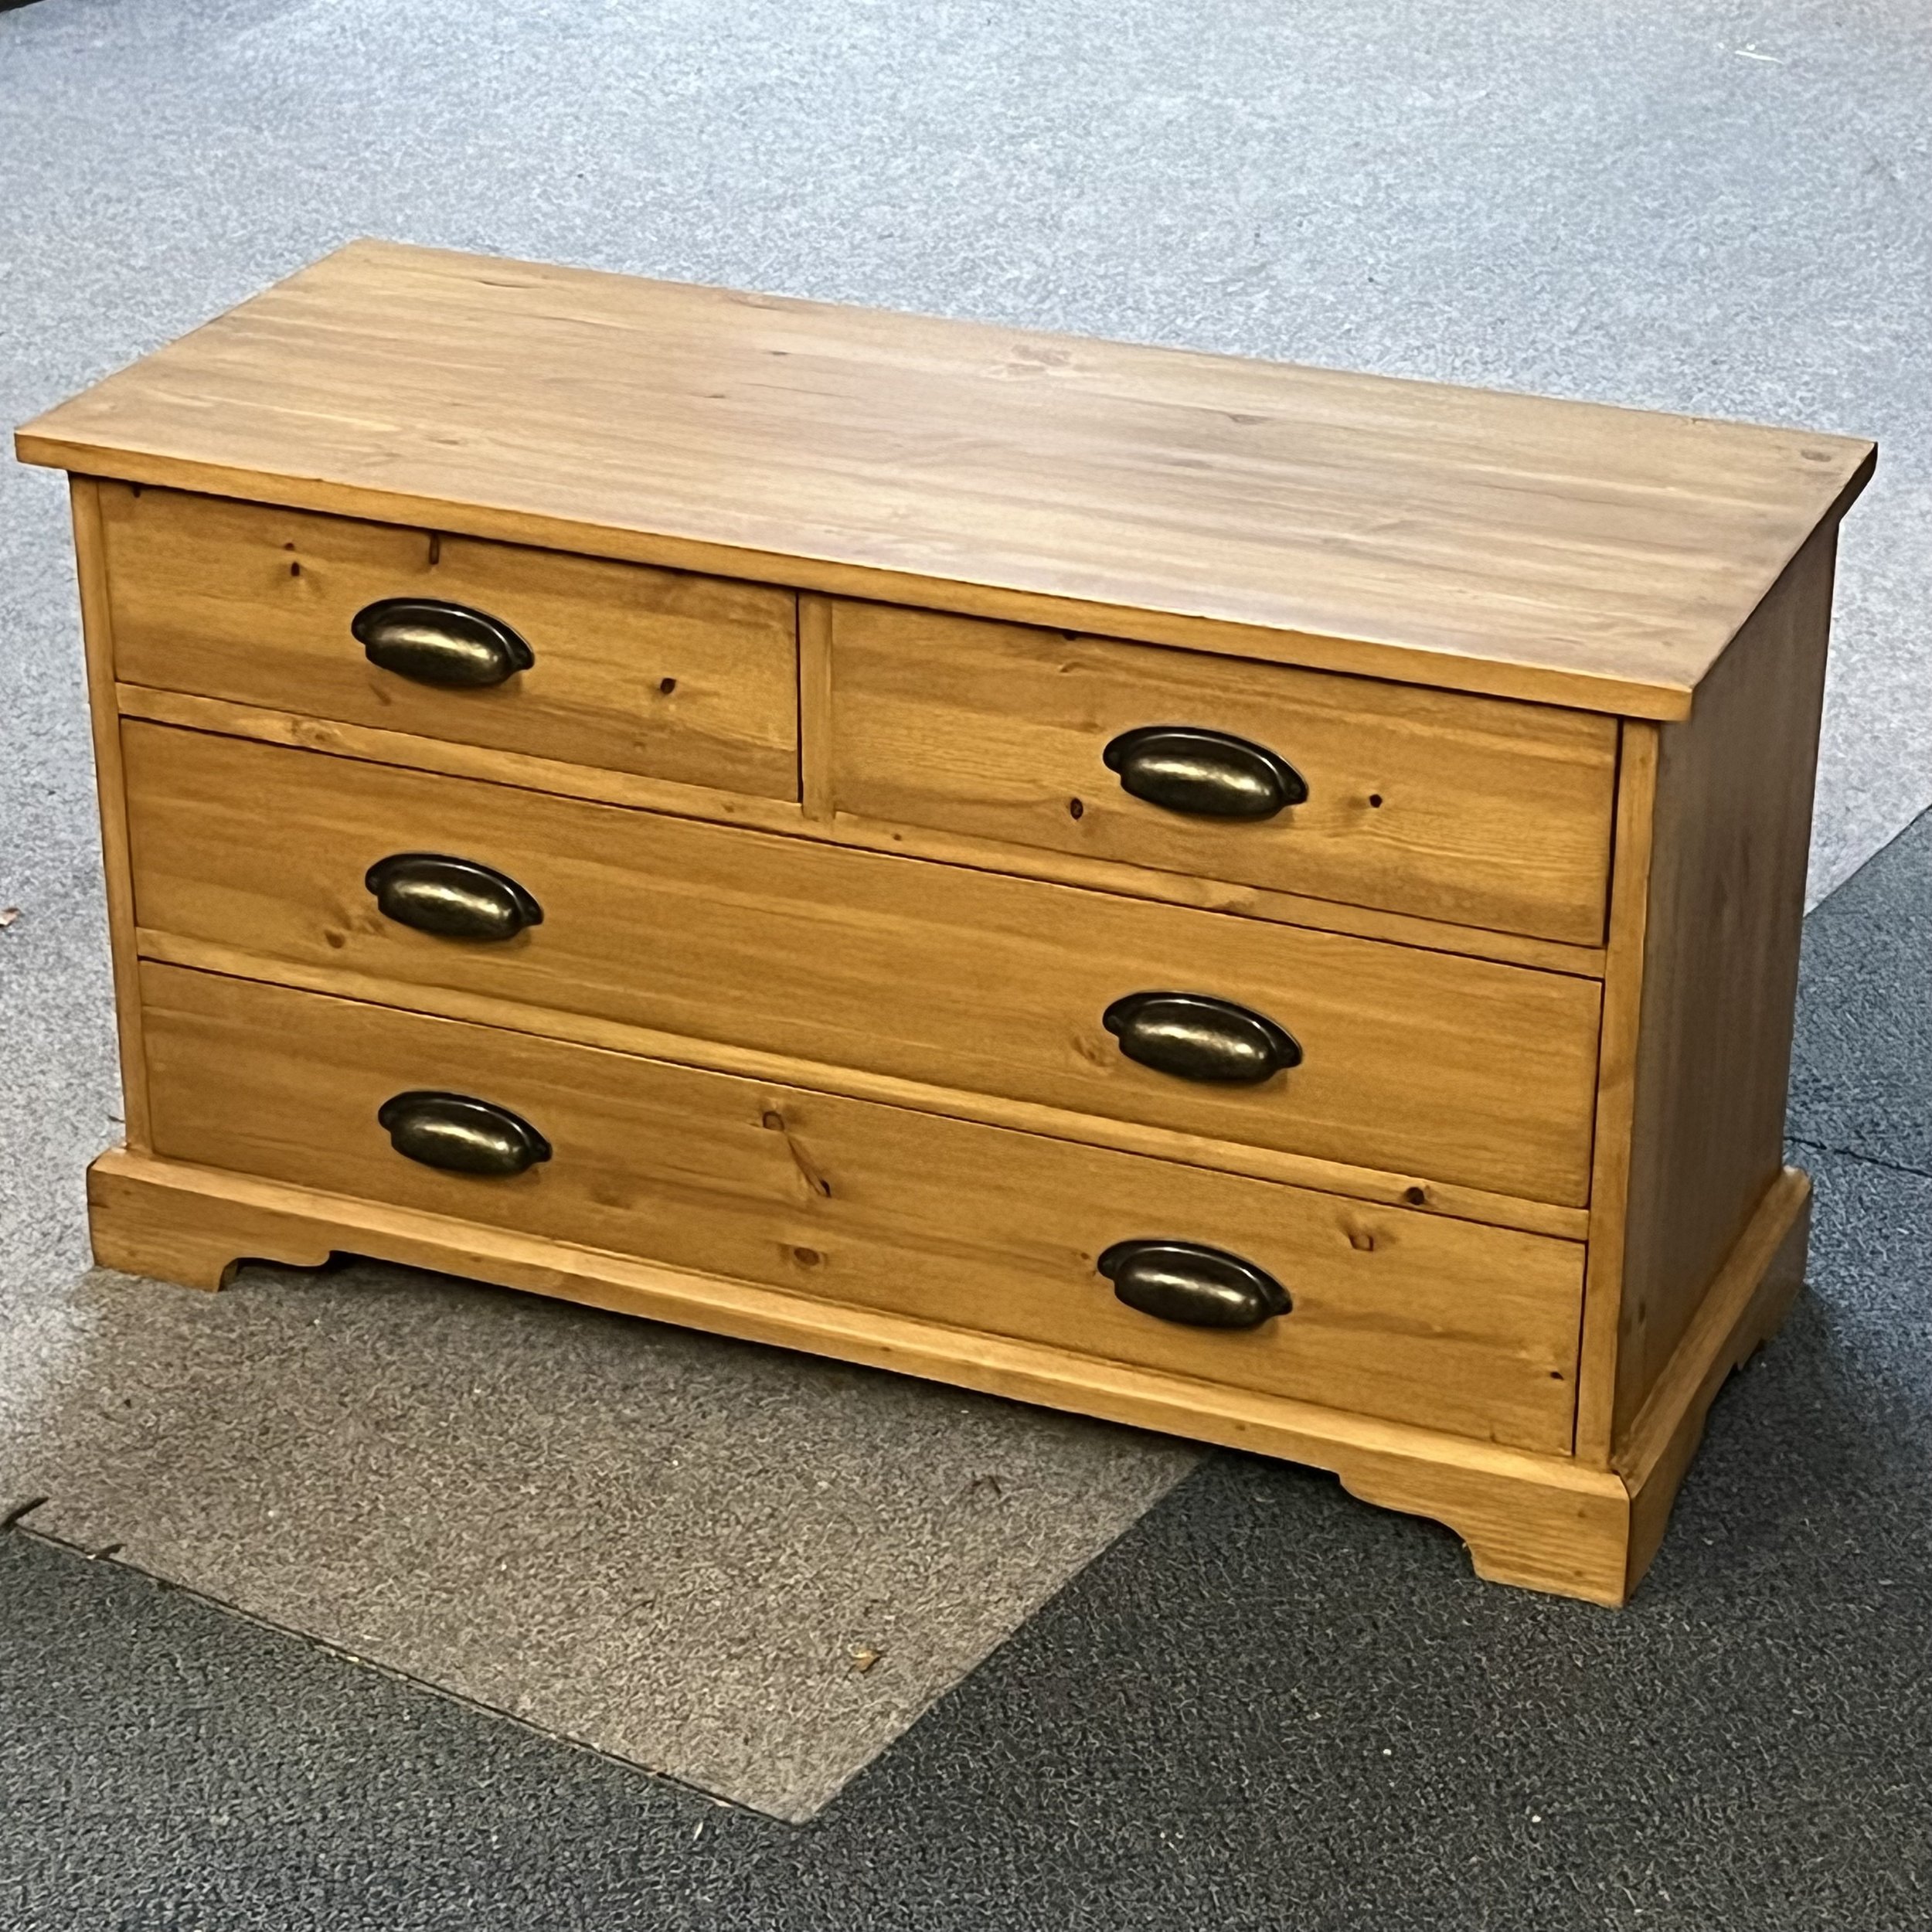 Small handmade pine chest of drawers